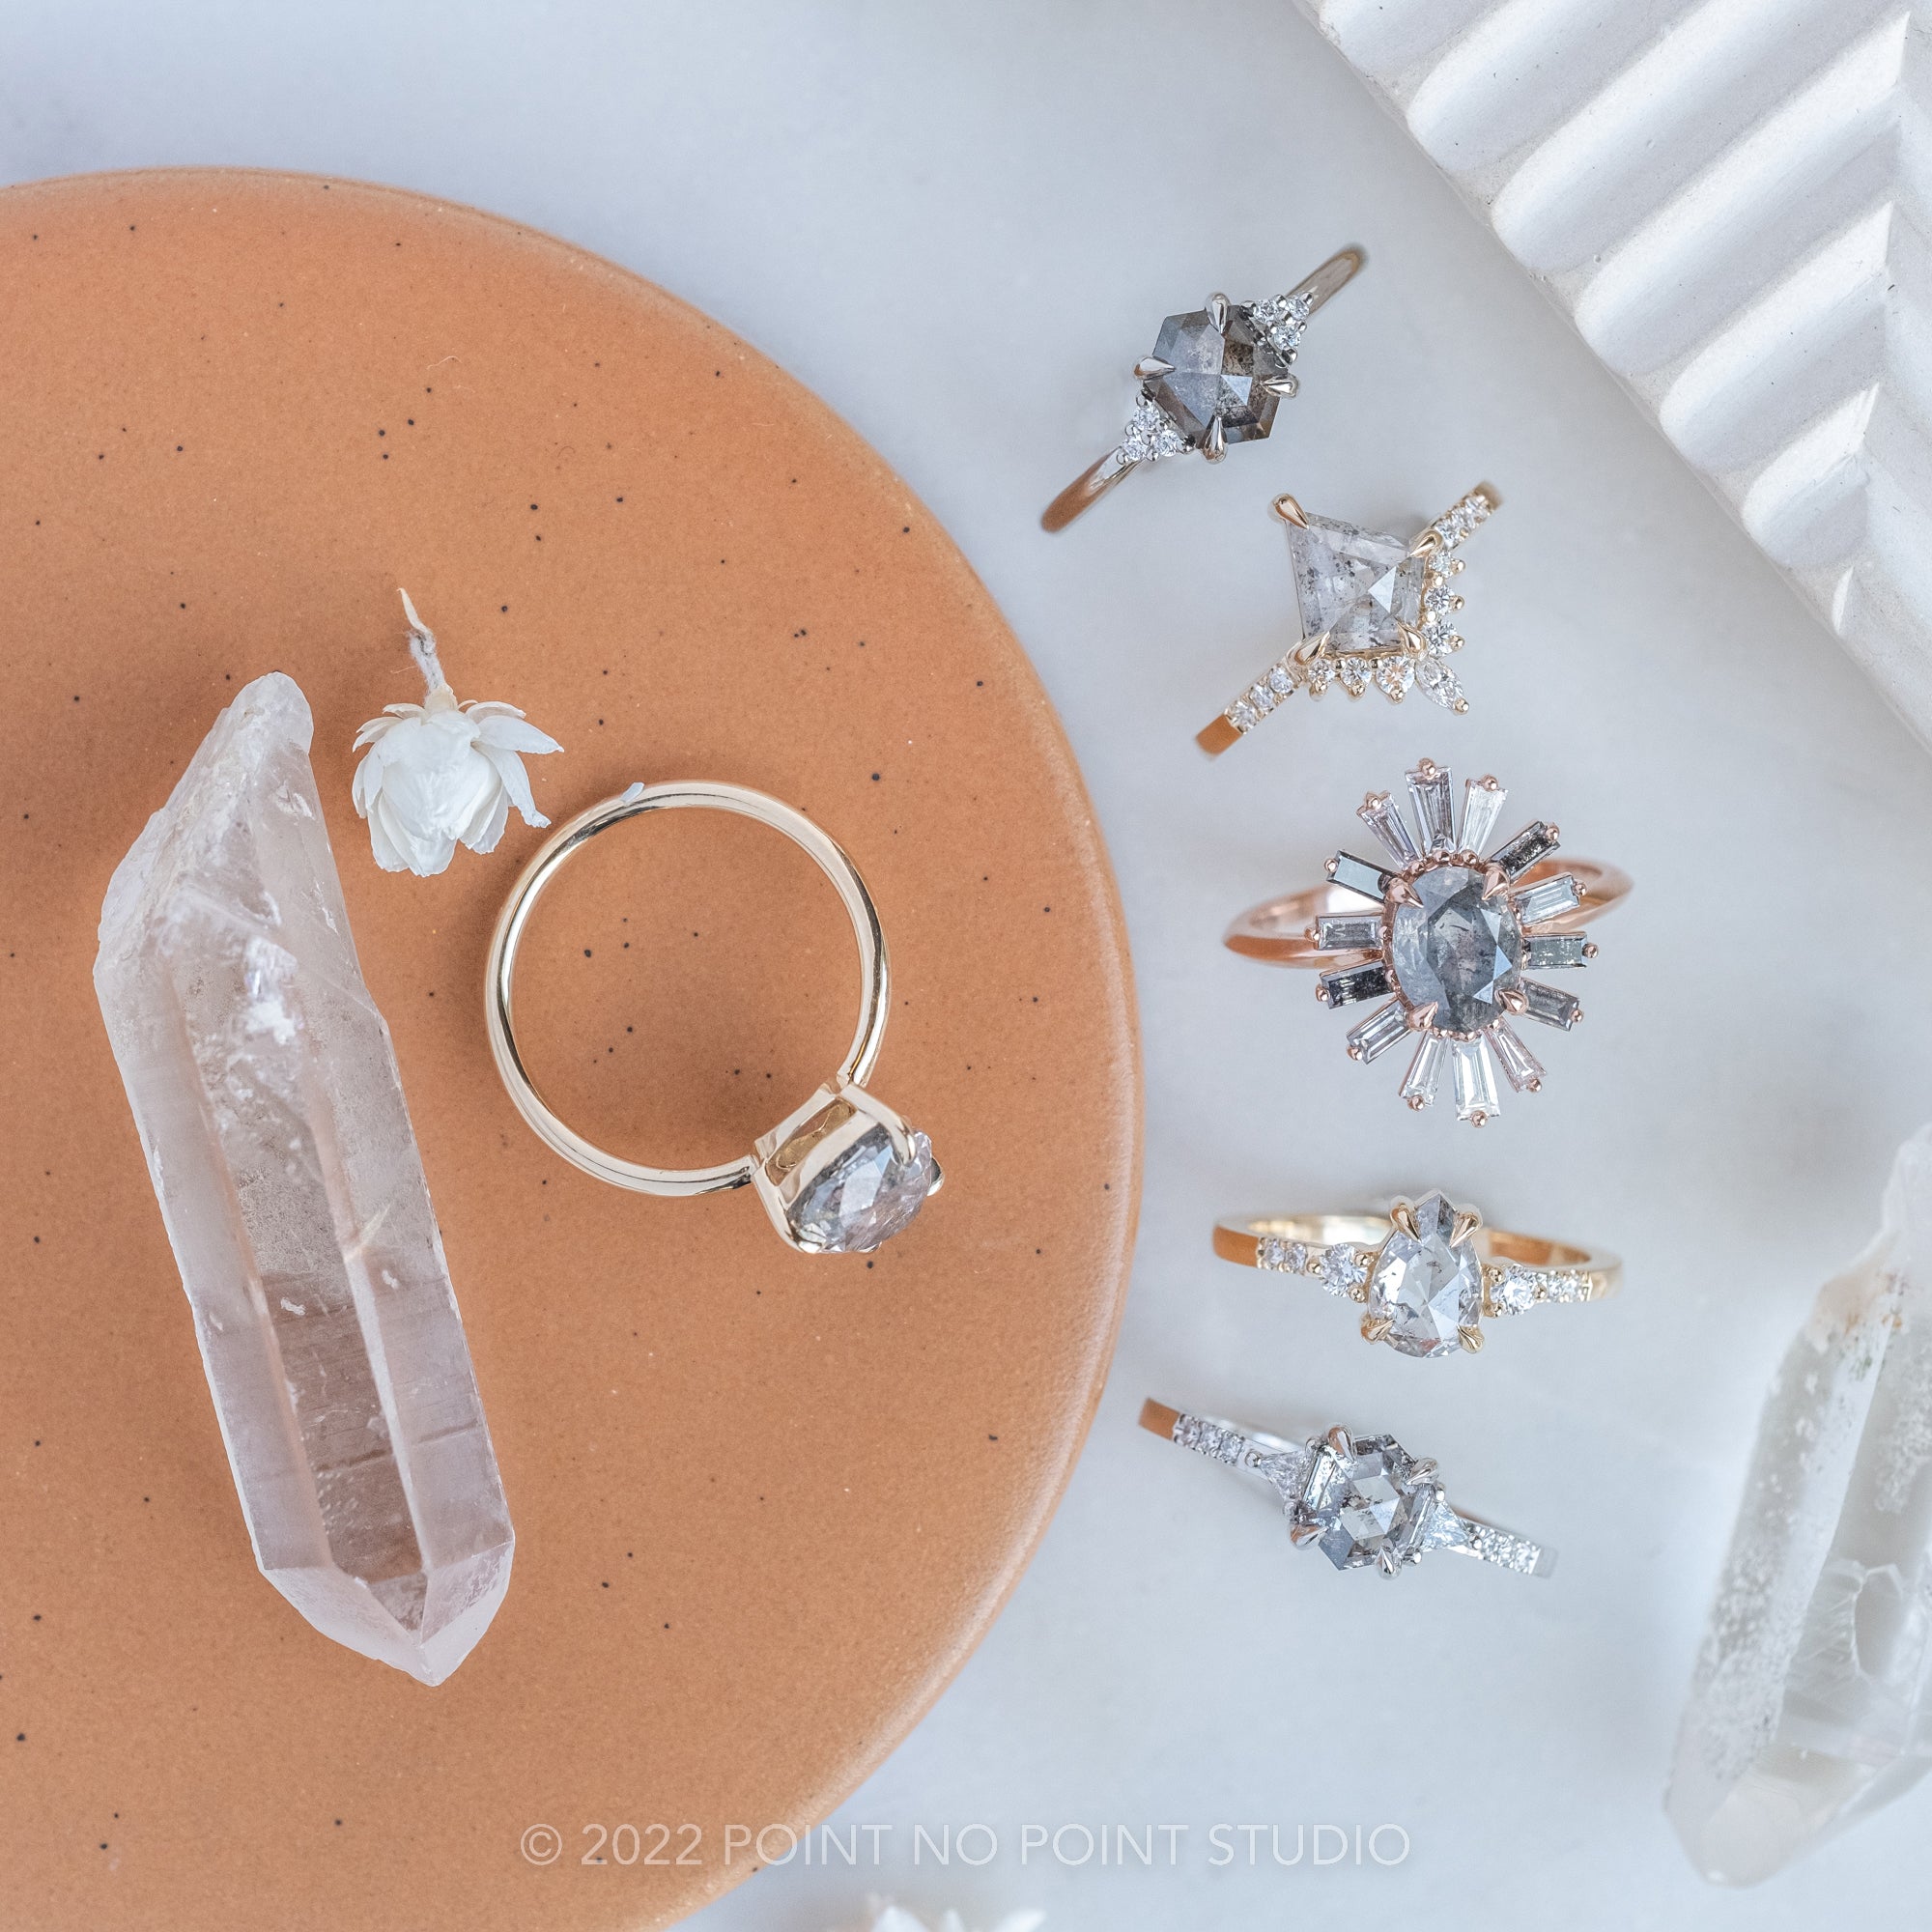 Diamond Rings for sale in Austin, Texas | Facebook Marketplace | Facebook